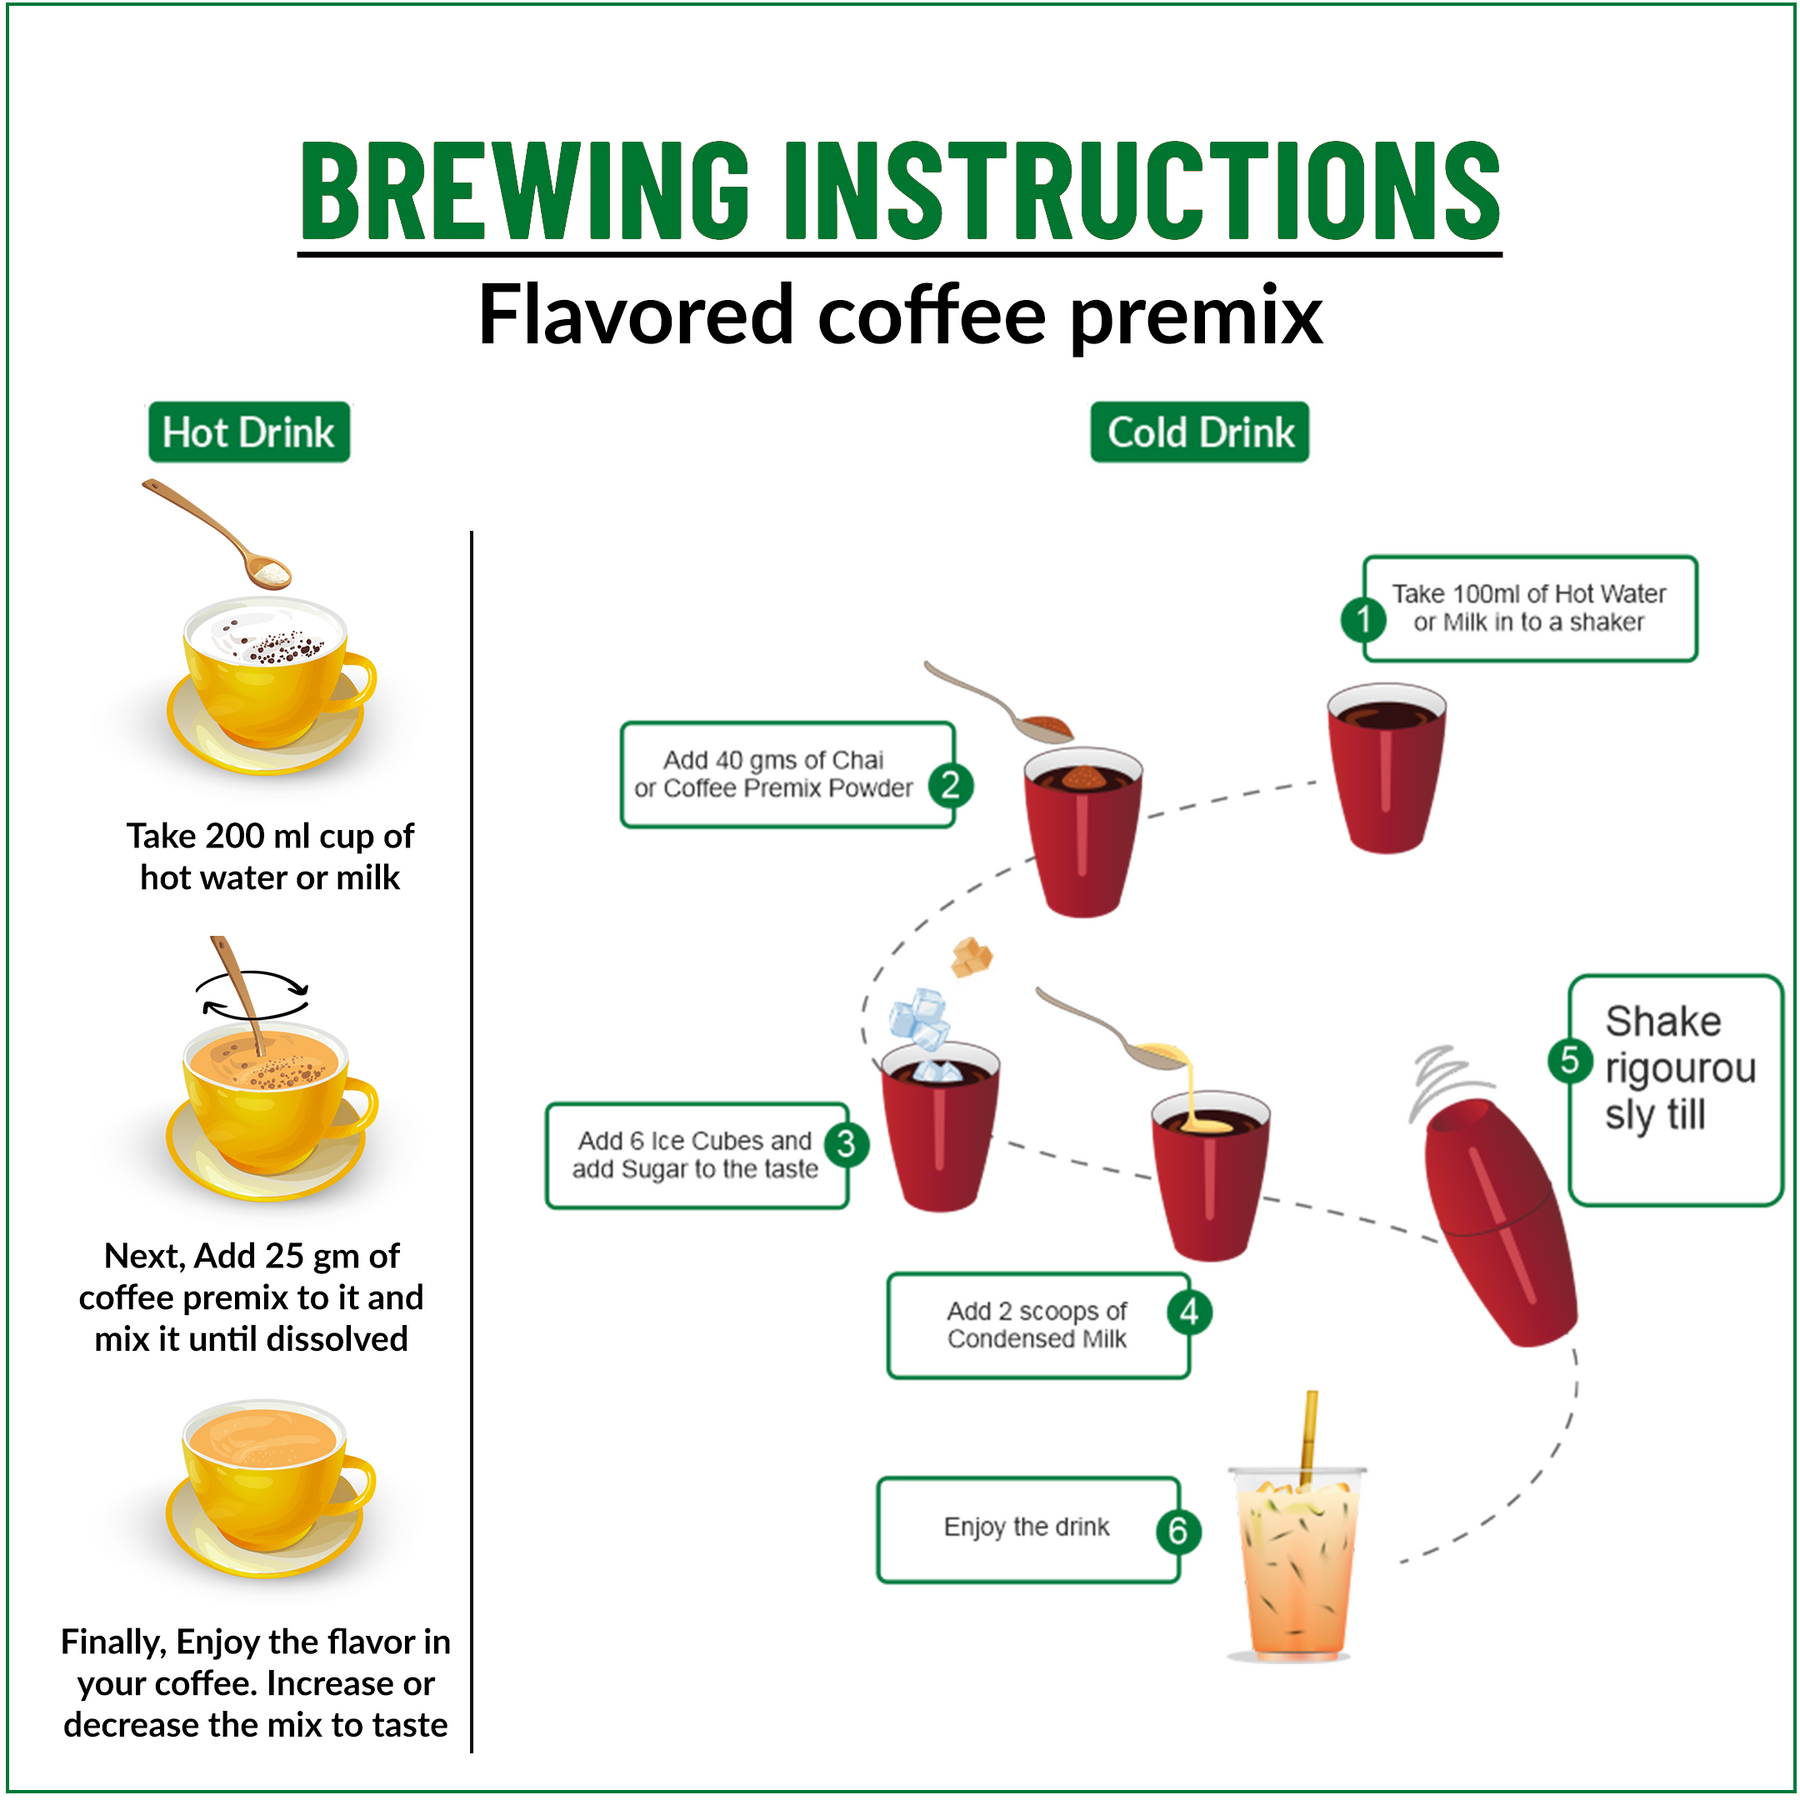 Coconut Freeze Instant Coffee Premix (3 in 1) - 250 gms